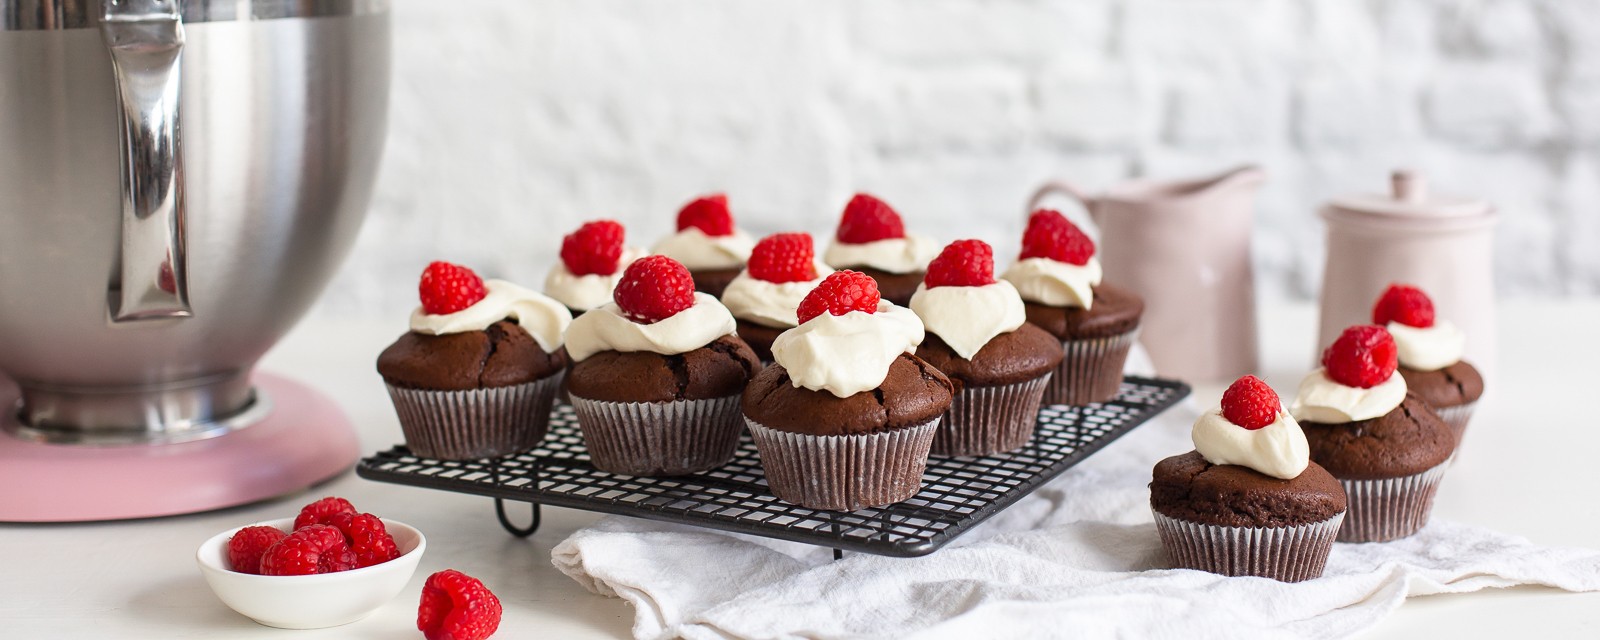 Import-Recipe - Chocolate muffins